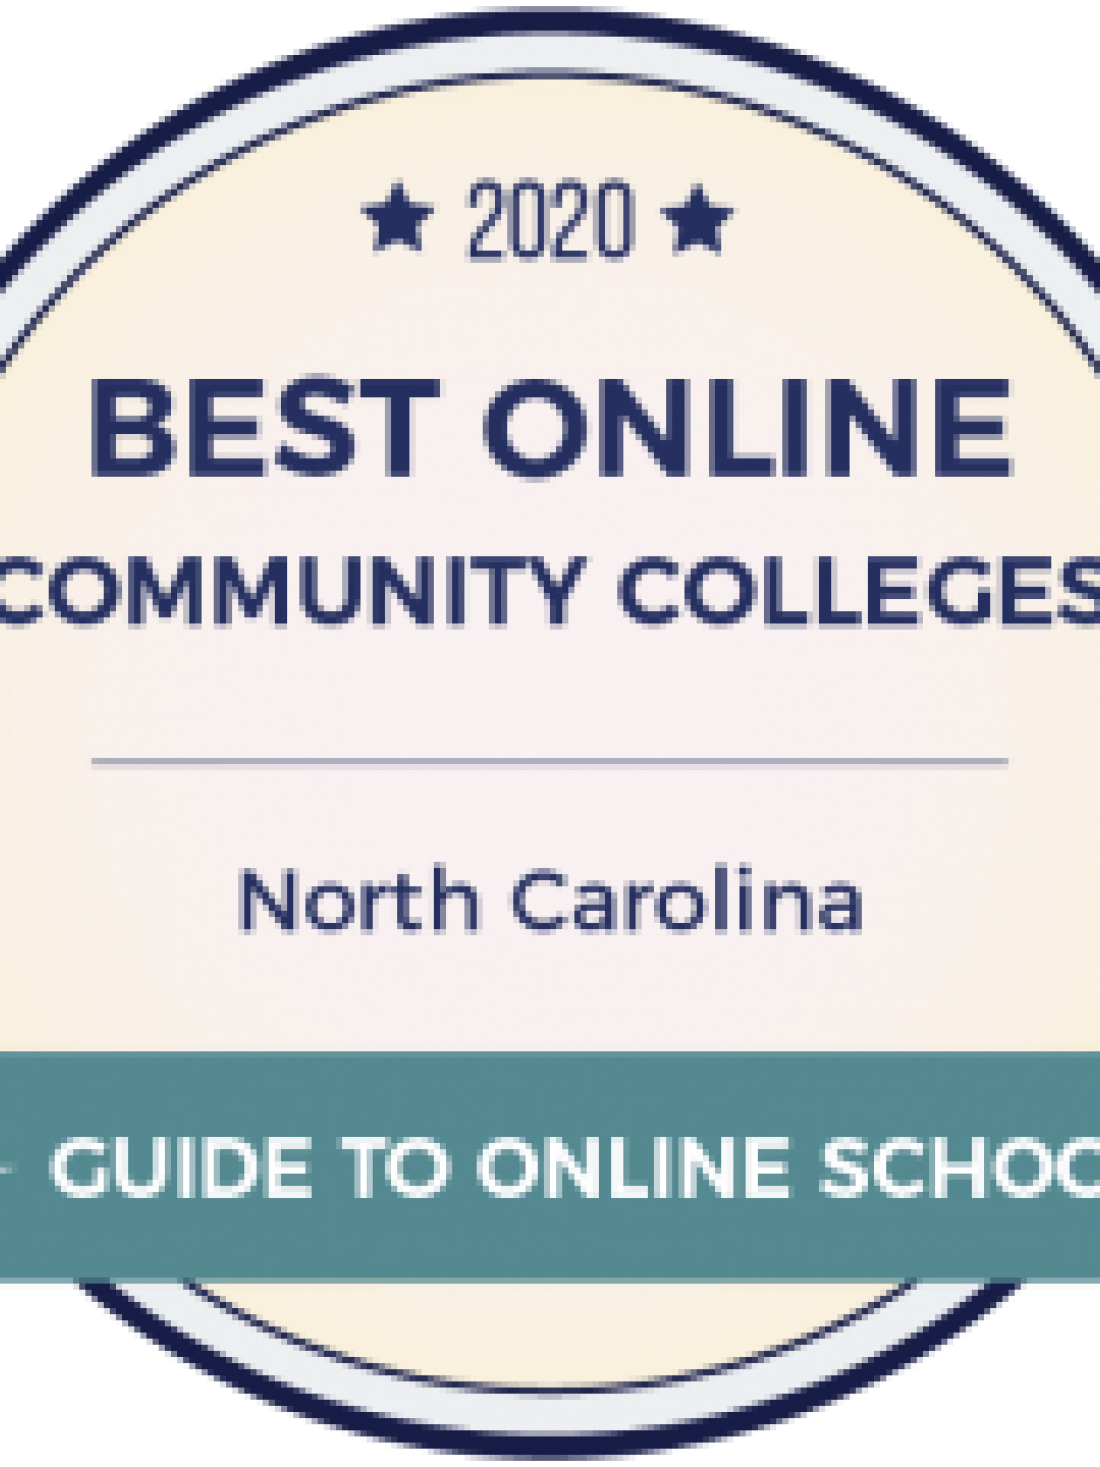 2020 best online community colleges guide to online schools logo